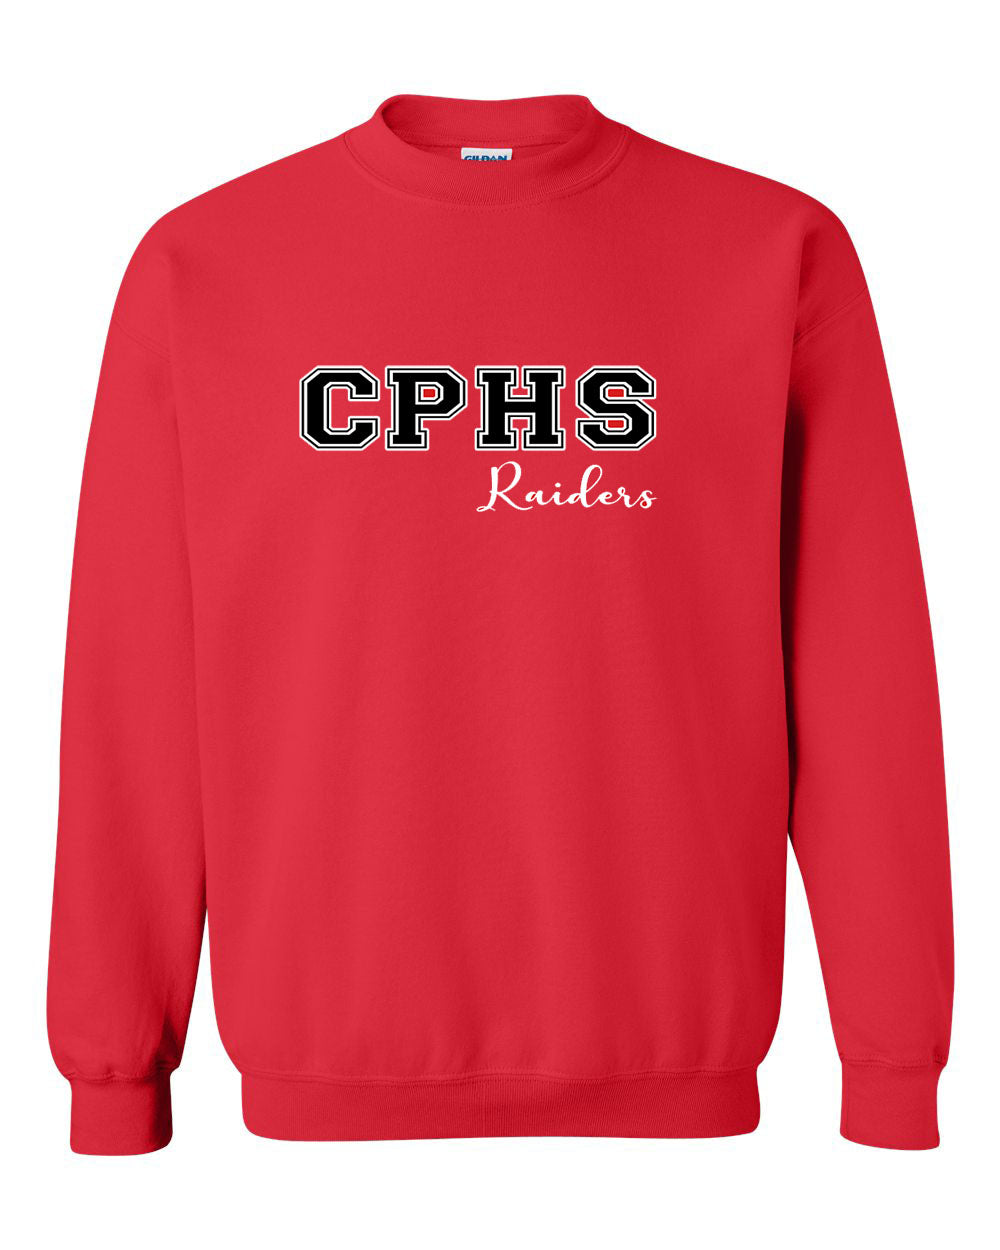 CPHS non hooded sweatshirt